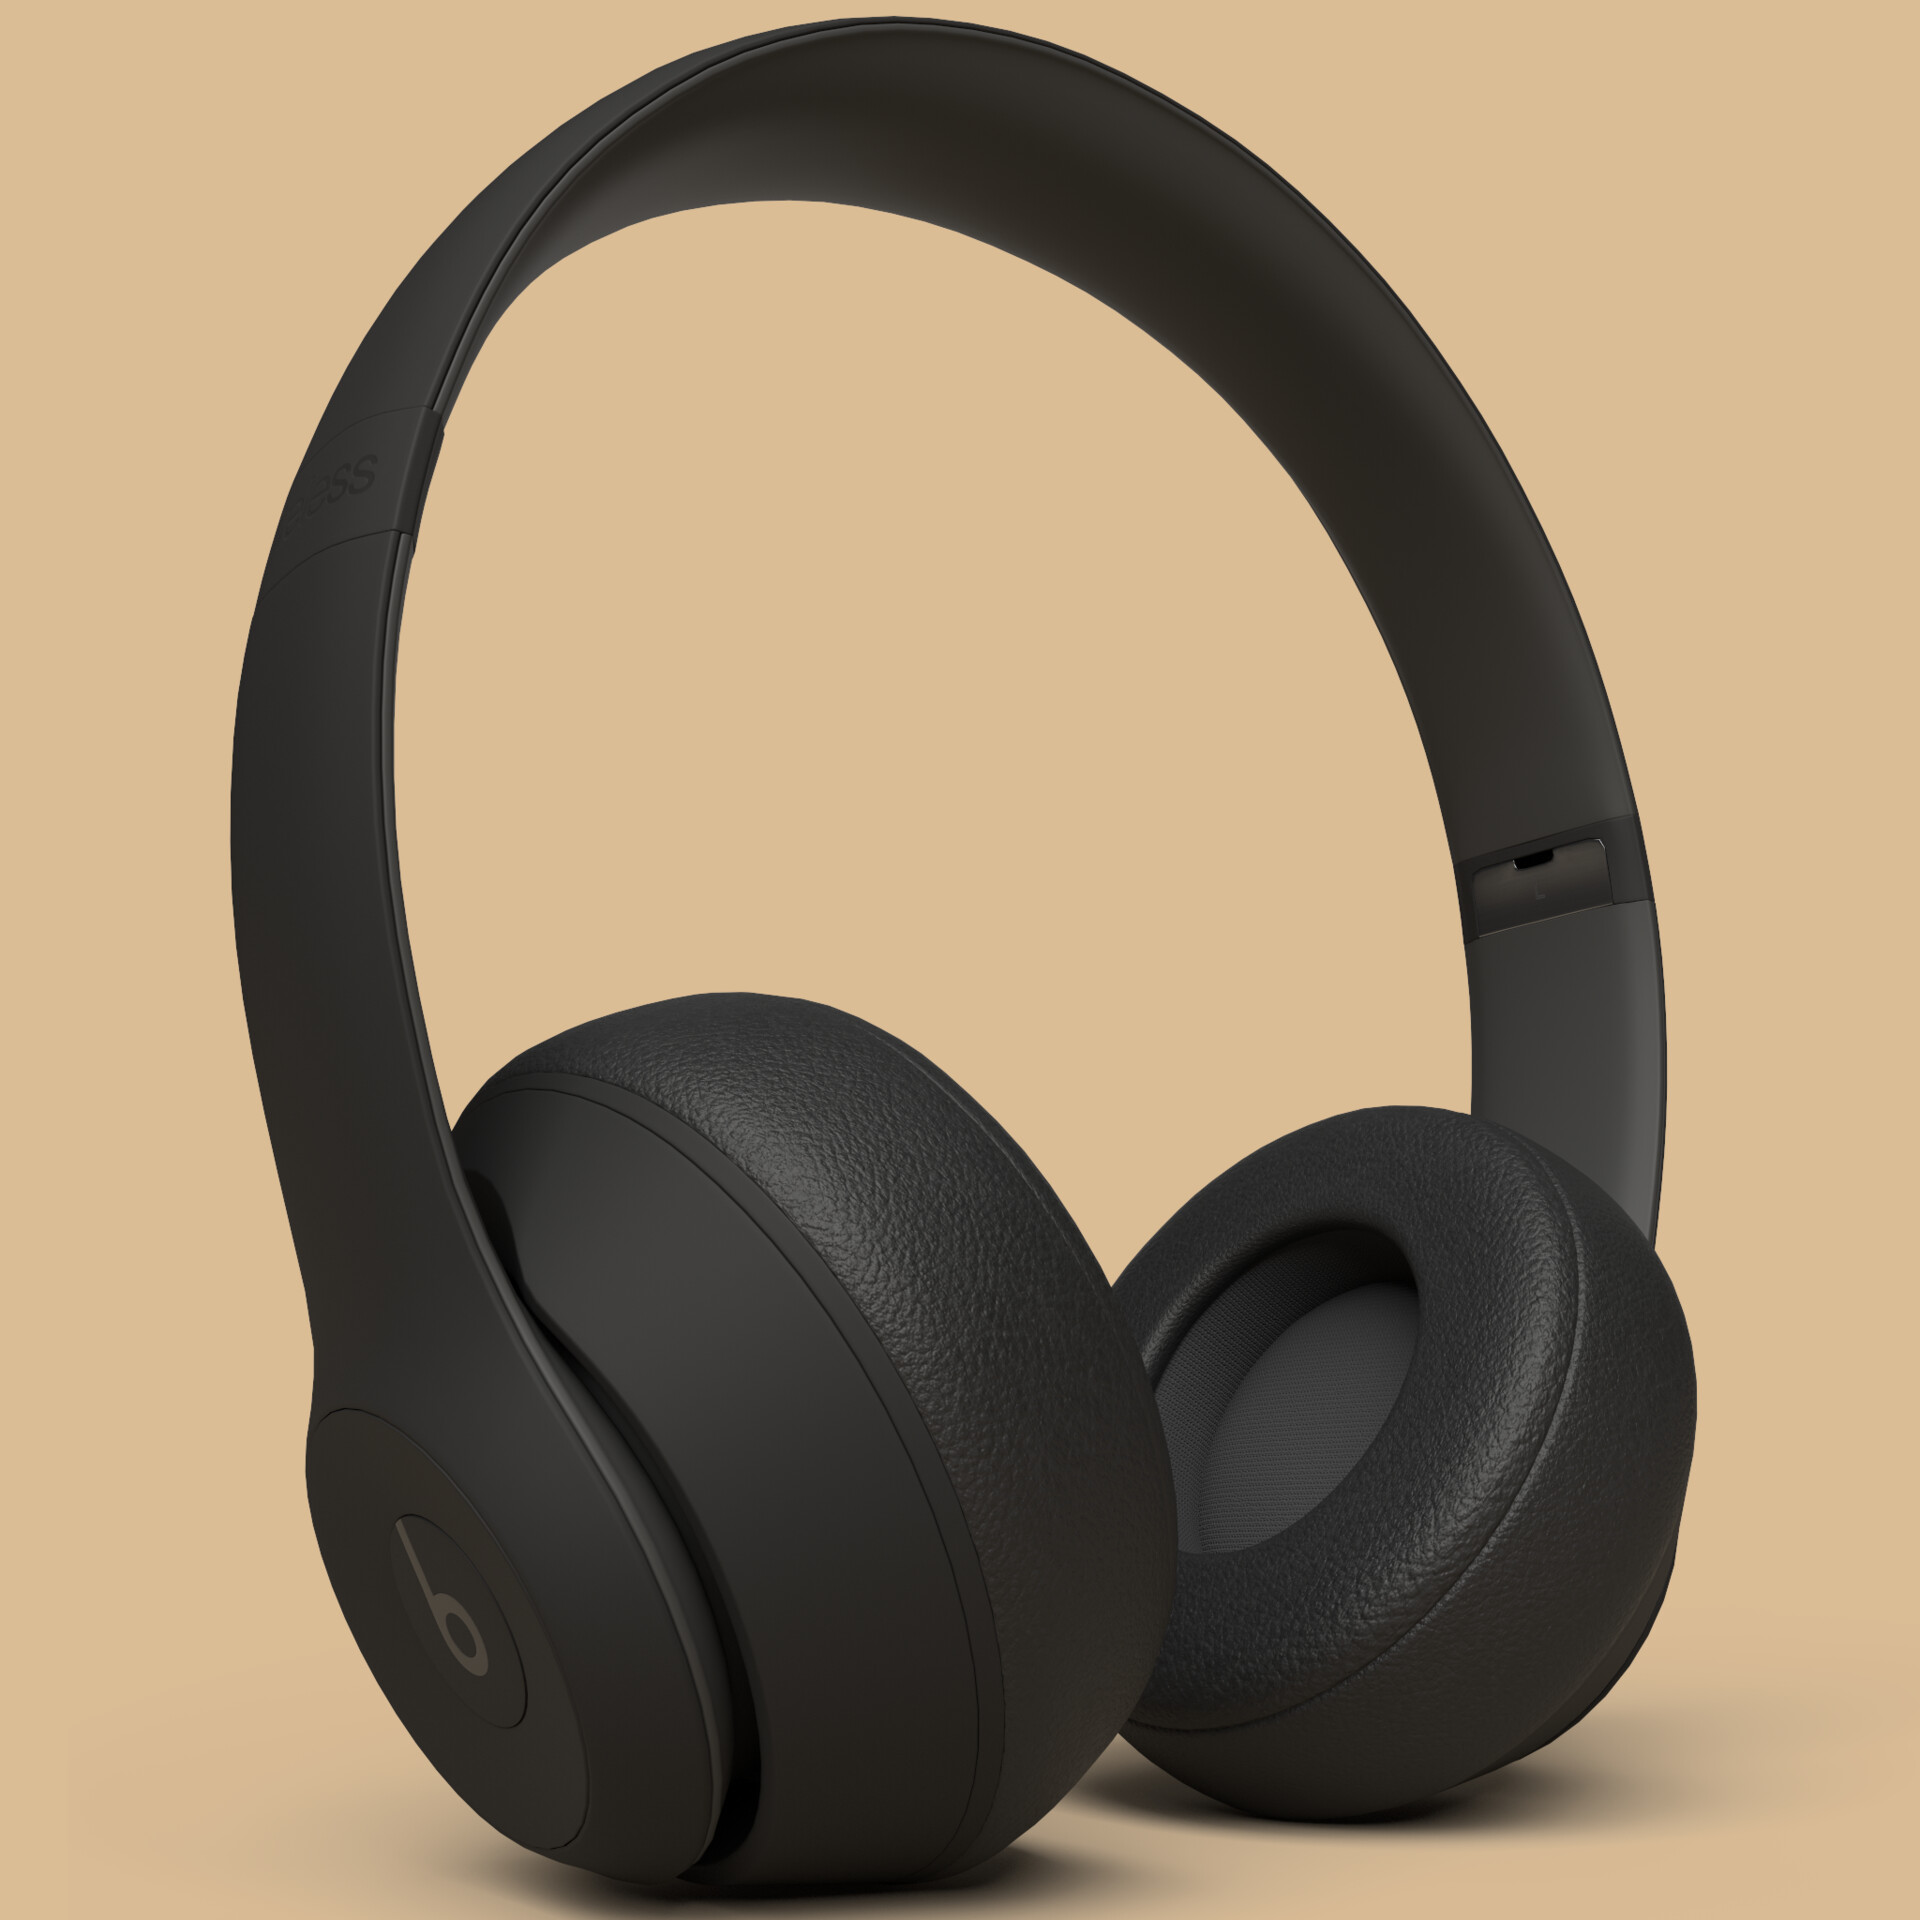 Chris Lemire - Beats Headphones